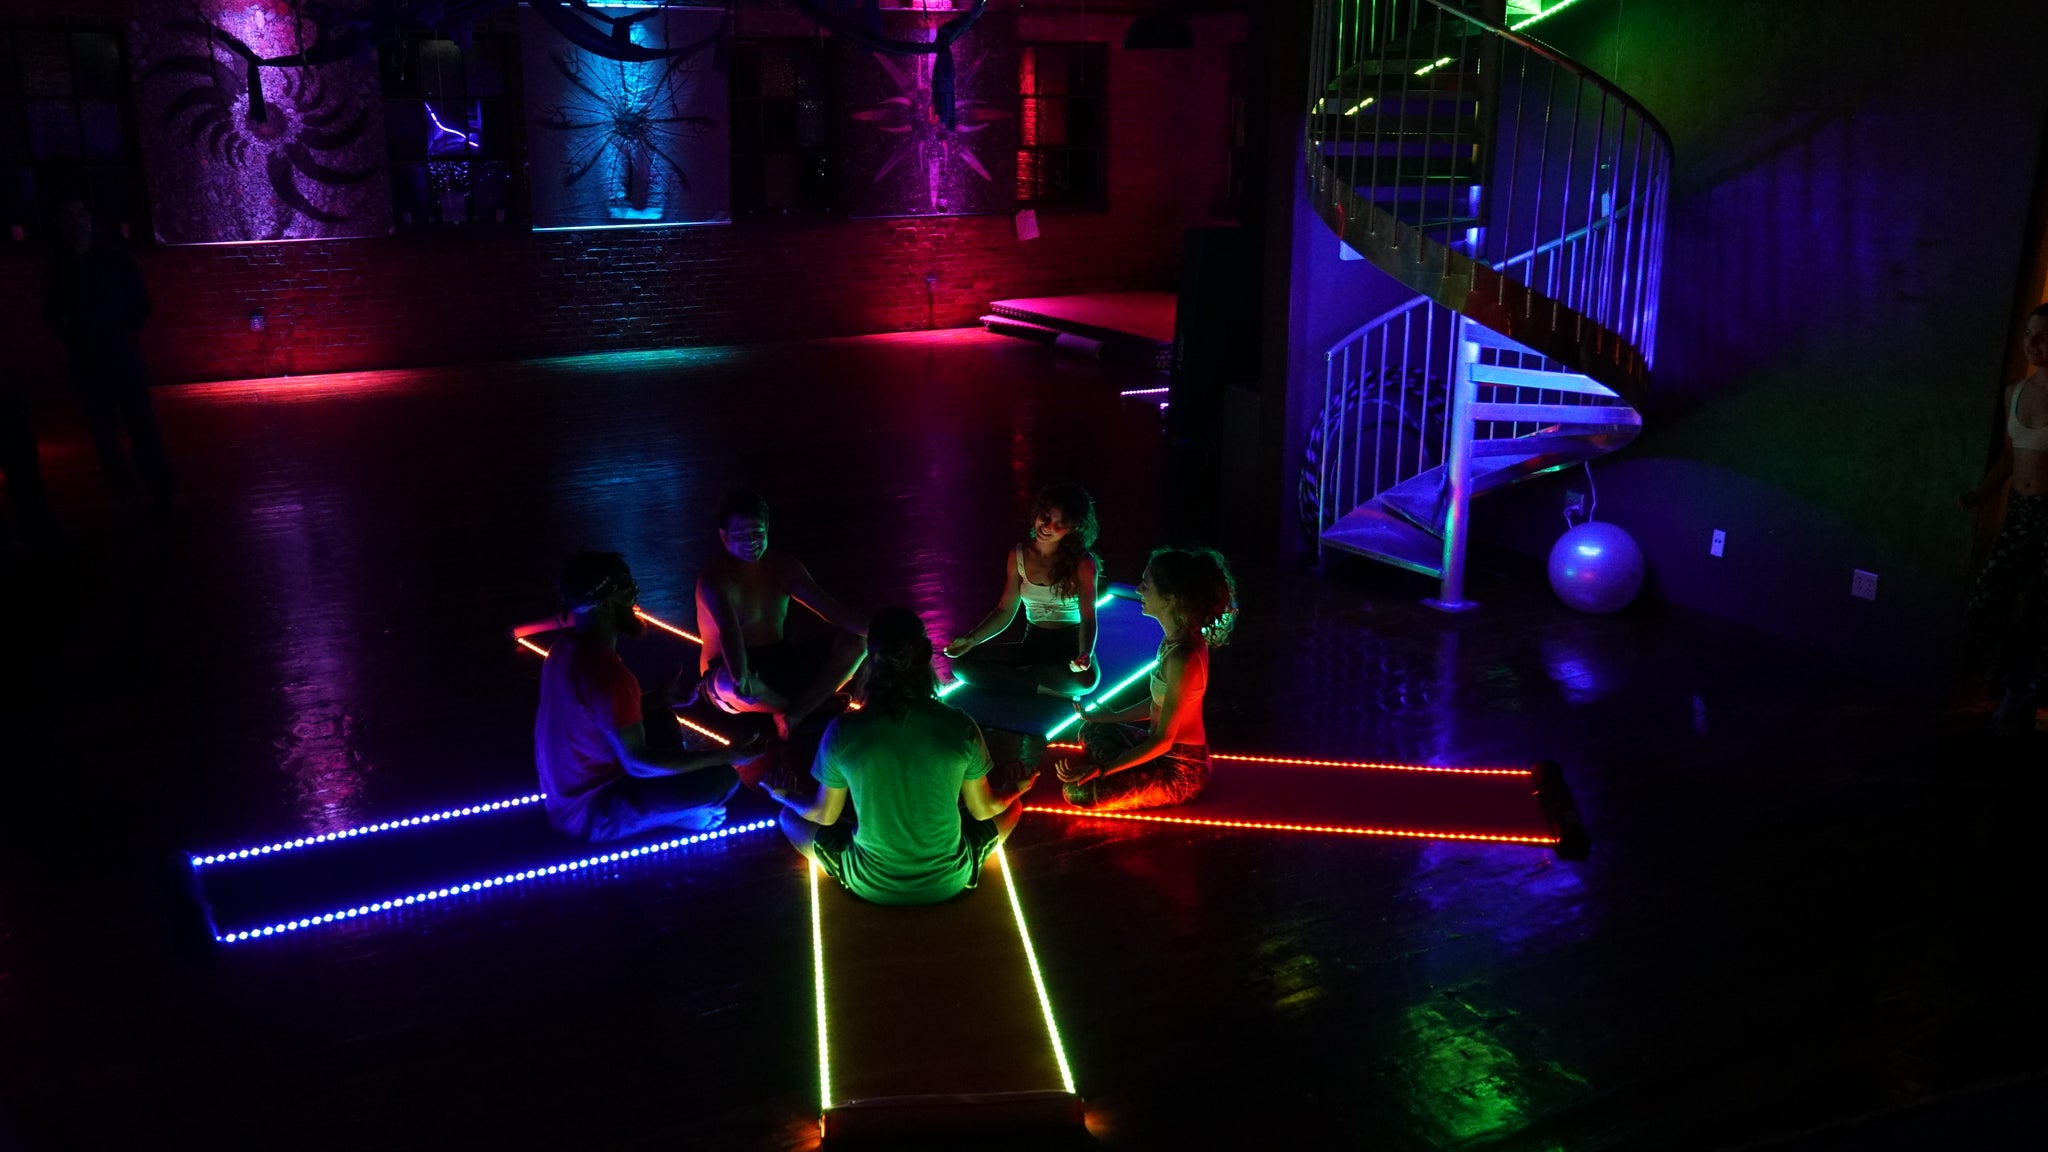 Glow Paint for Glow Yoga with GloMats! - LightUpYogaMat